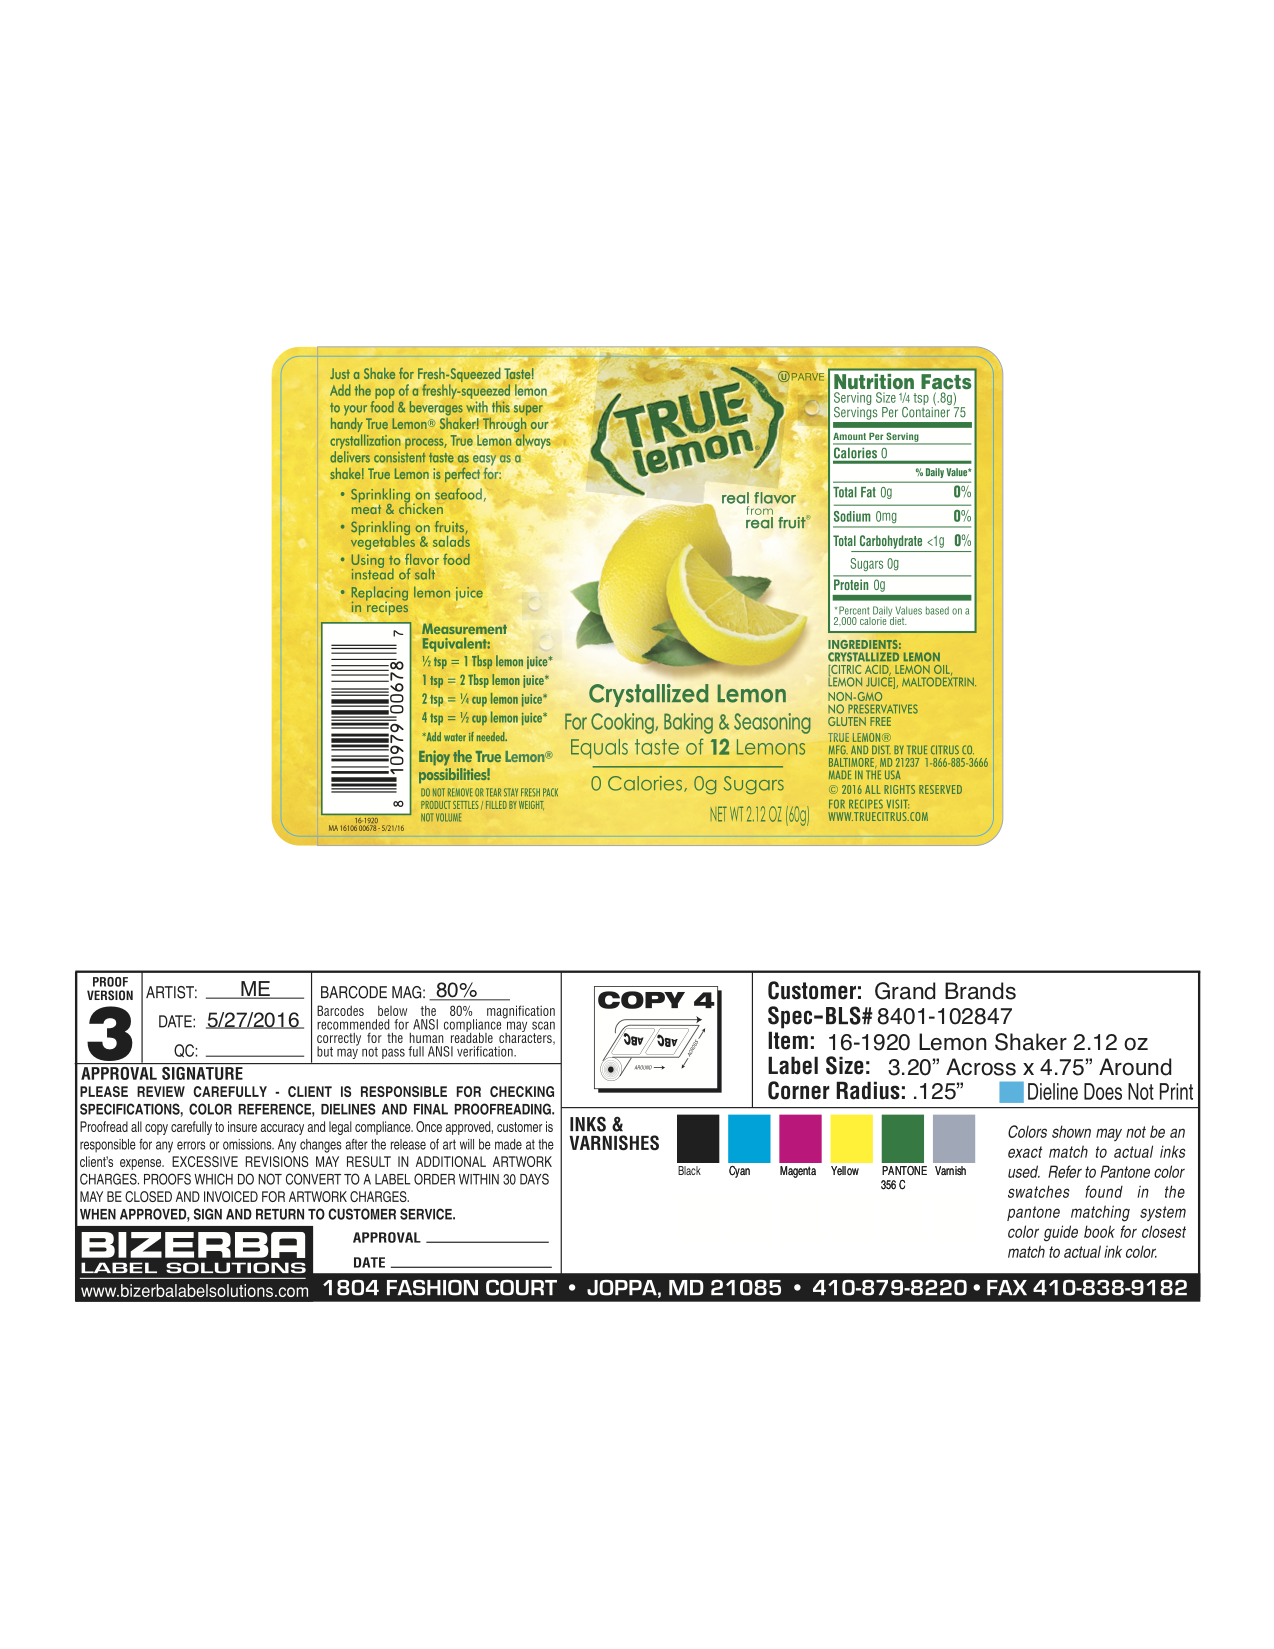 True Lemon Shaker 6 units per case 2.2 oz Product Label